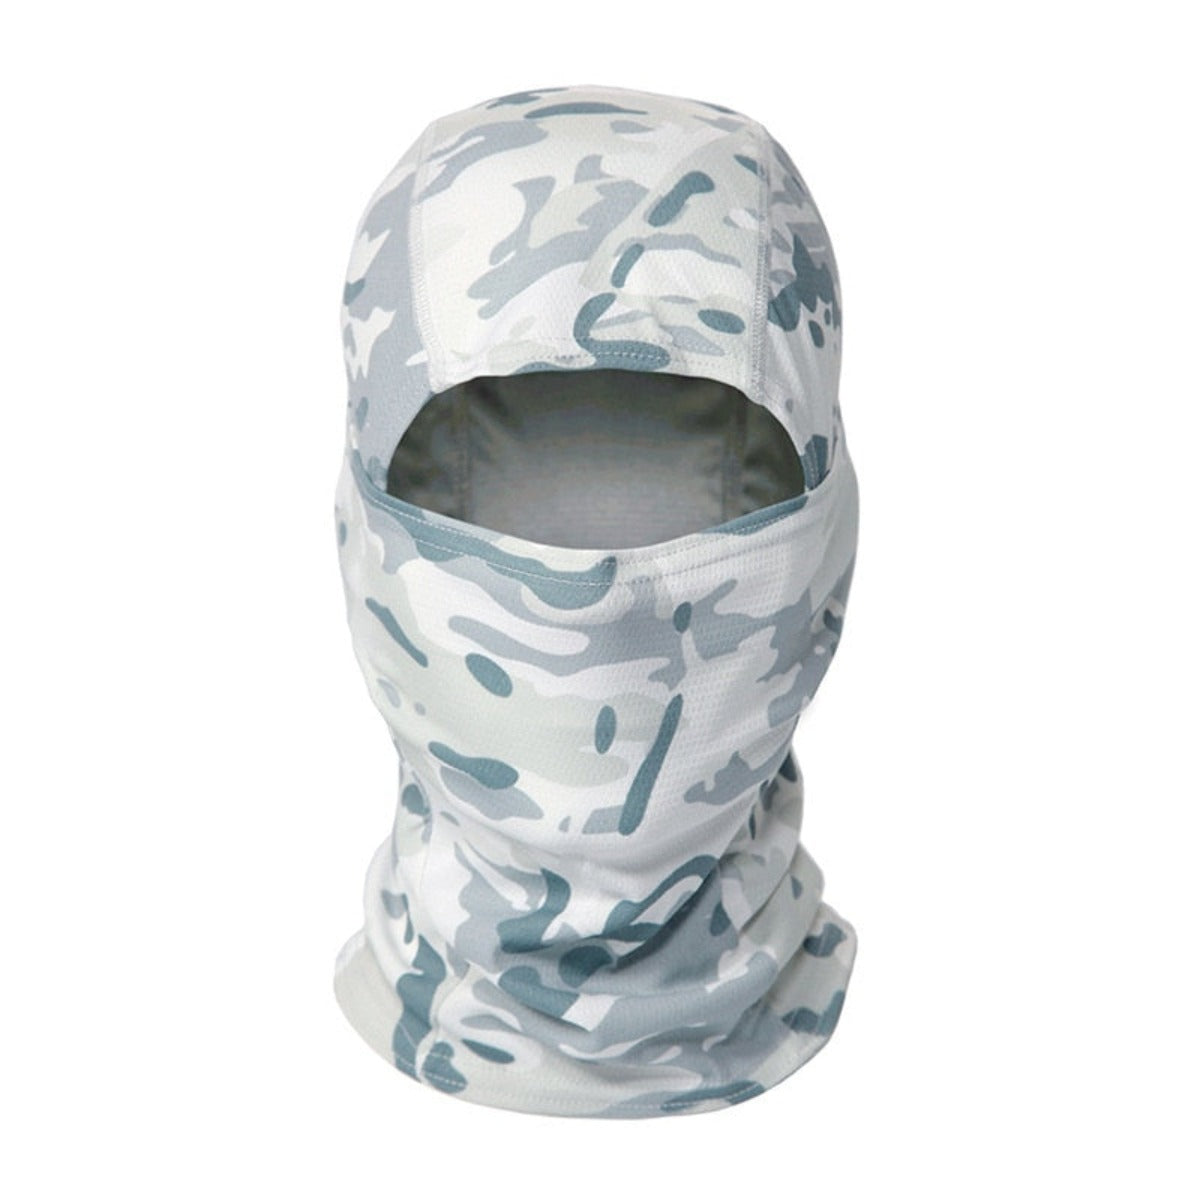 MultiCam Full Face Mask Cover - Scorpion Snow